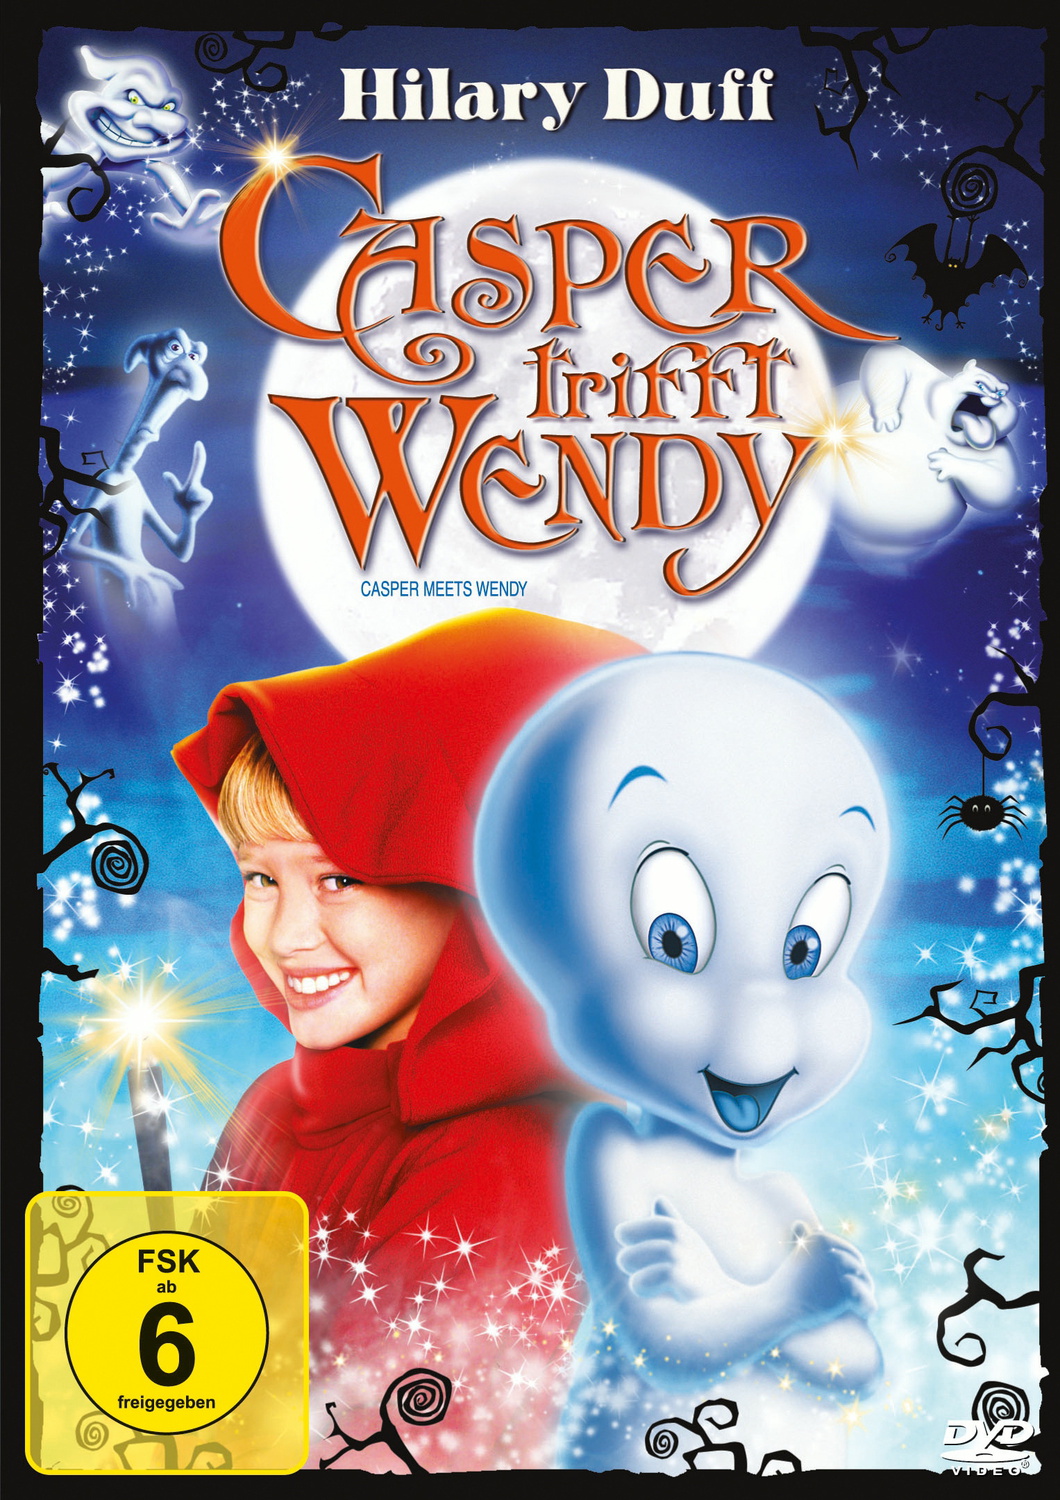 Casper és Wendy online